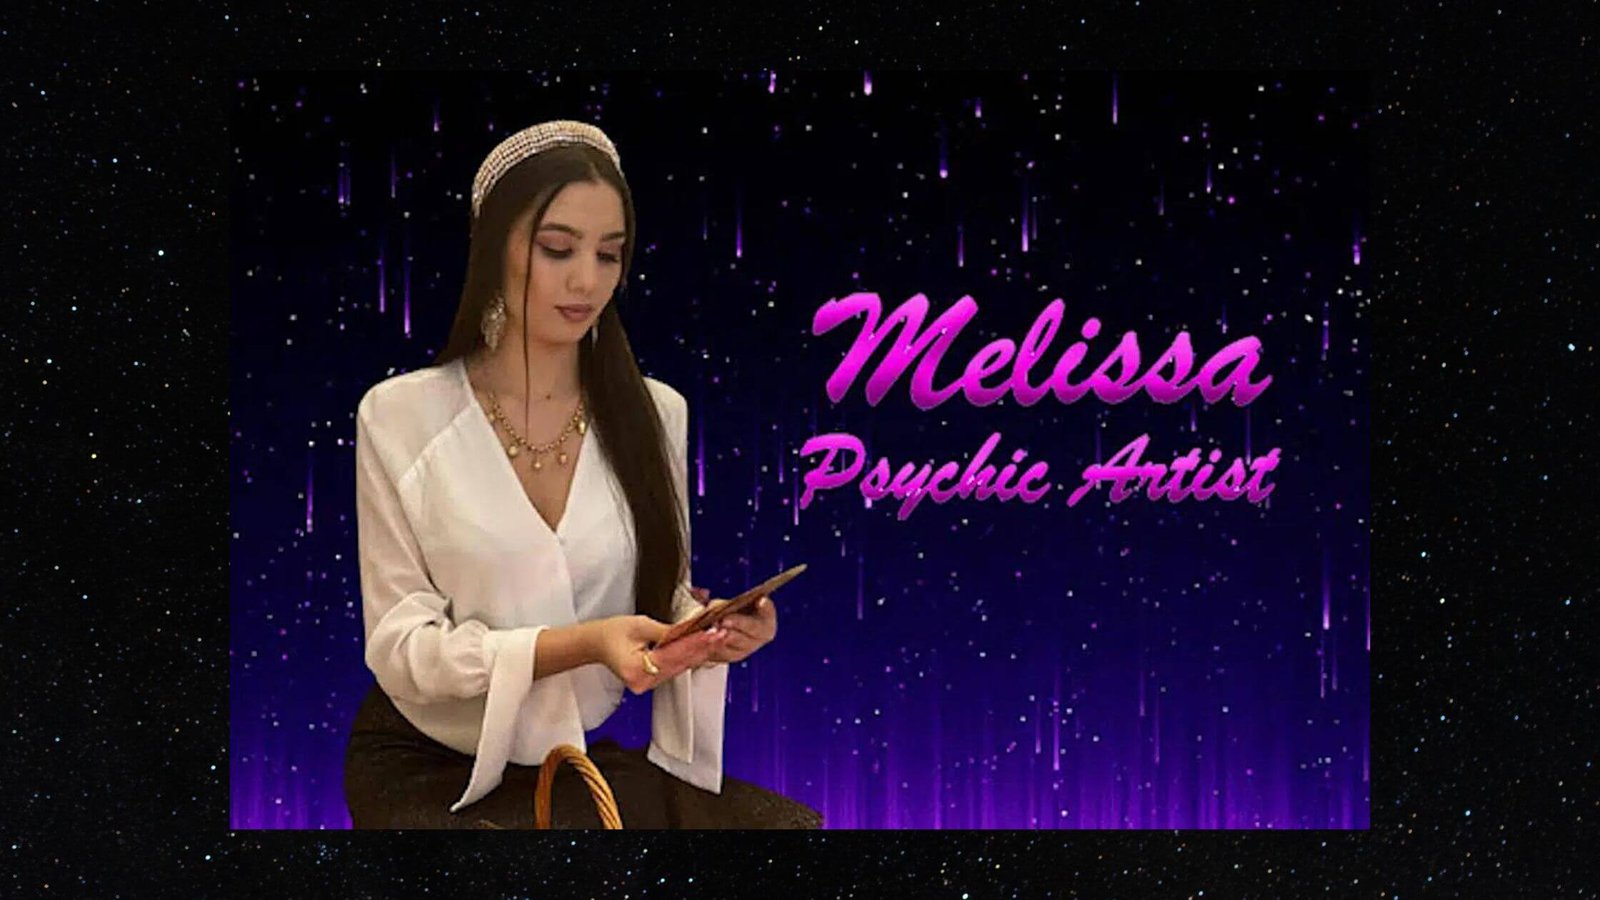 Melissa Psychic Artist Reviews